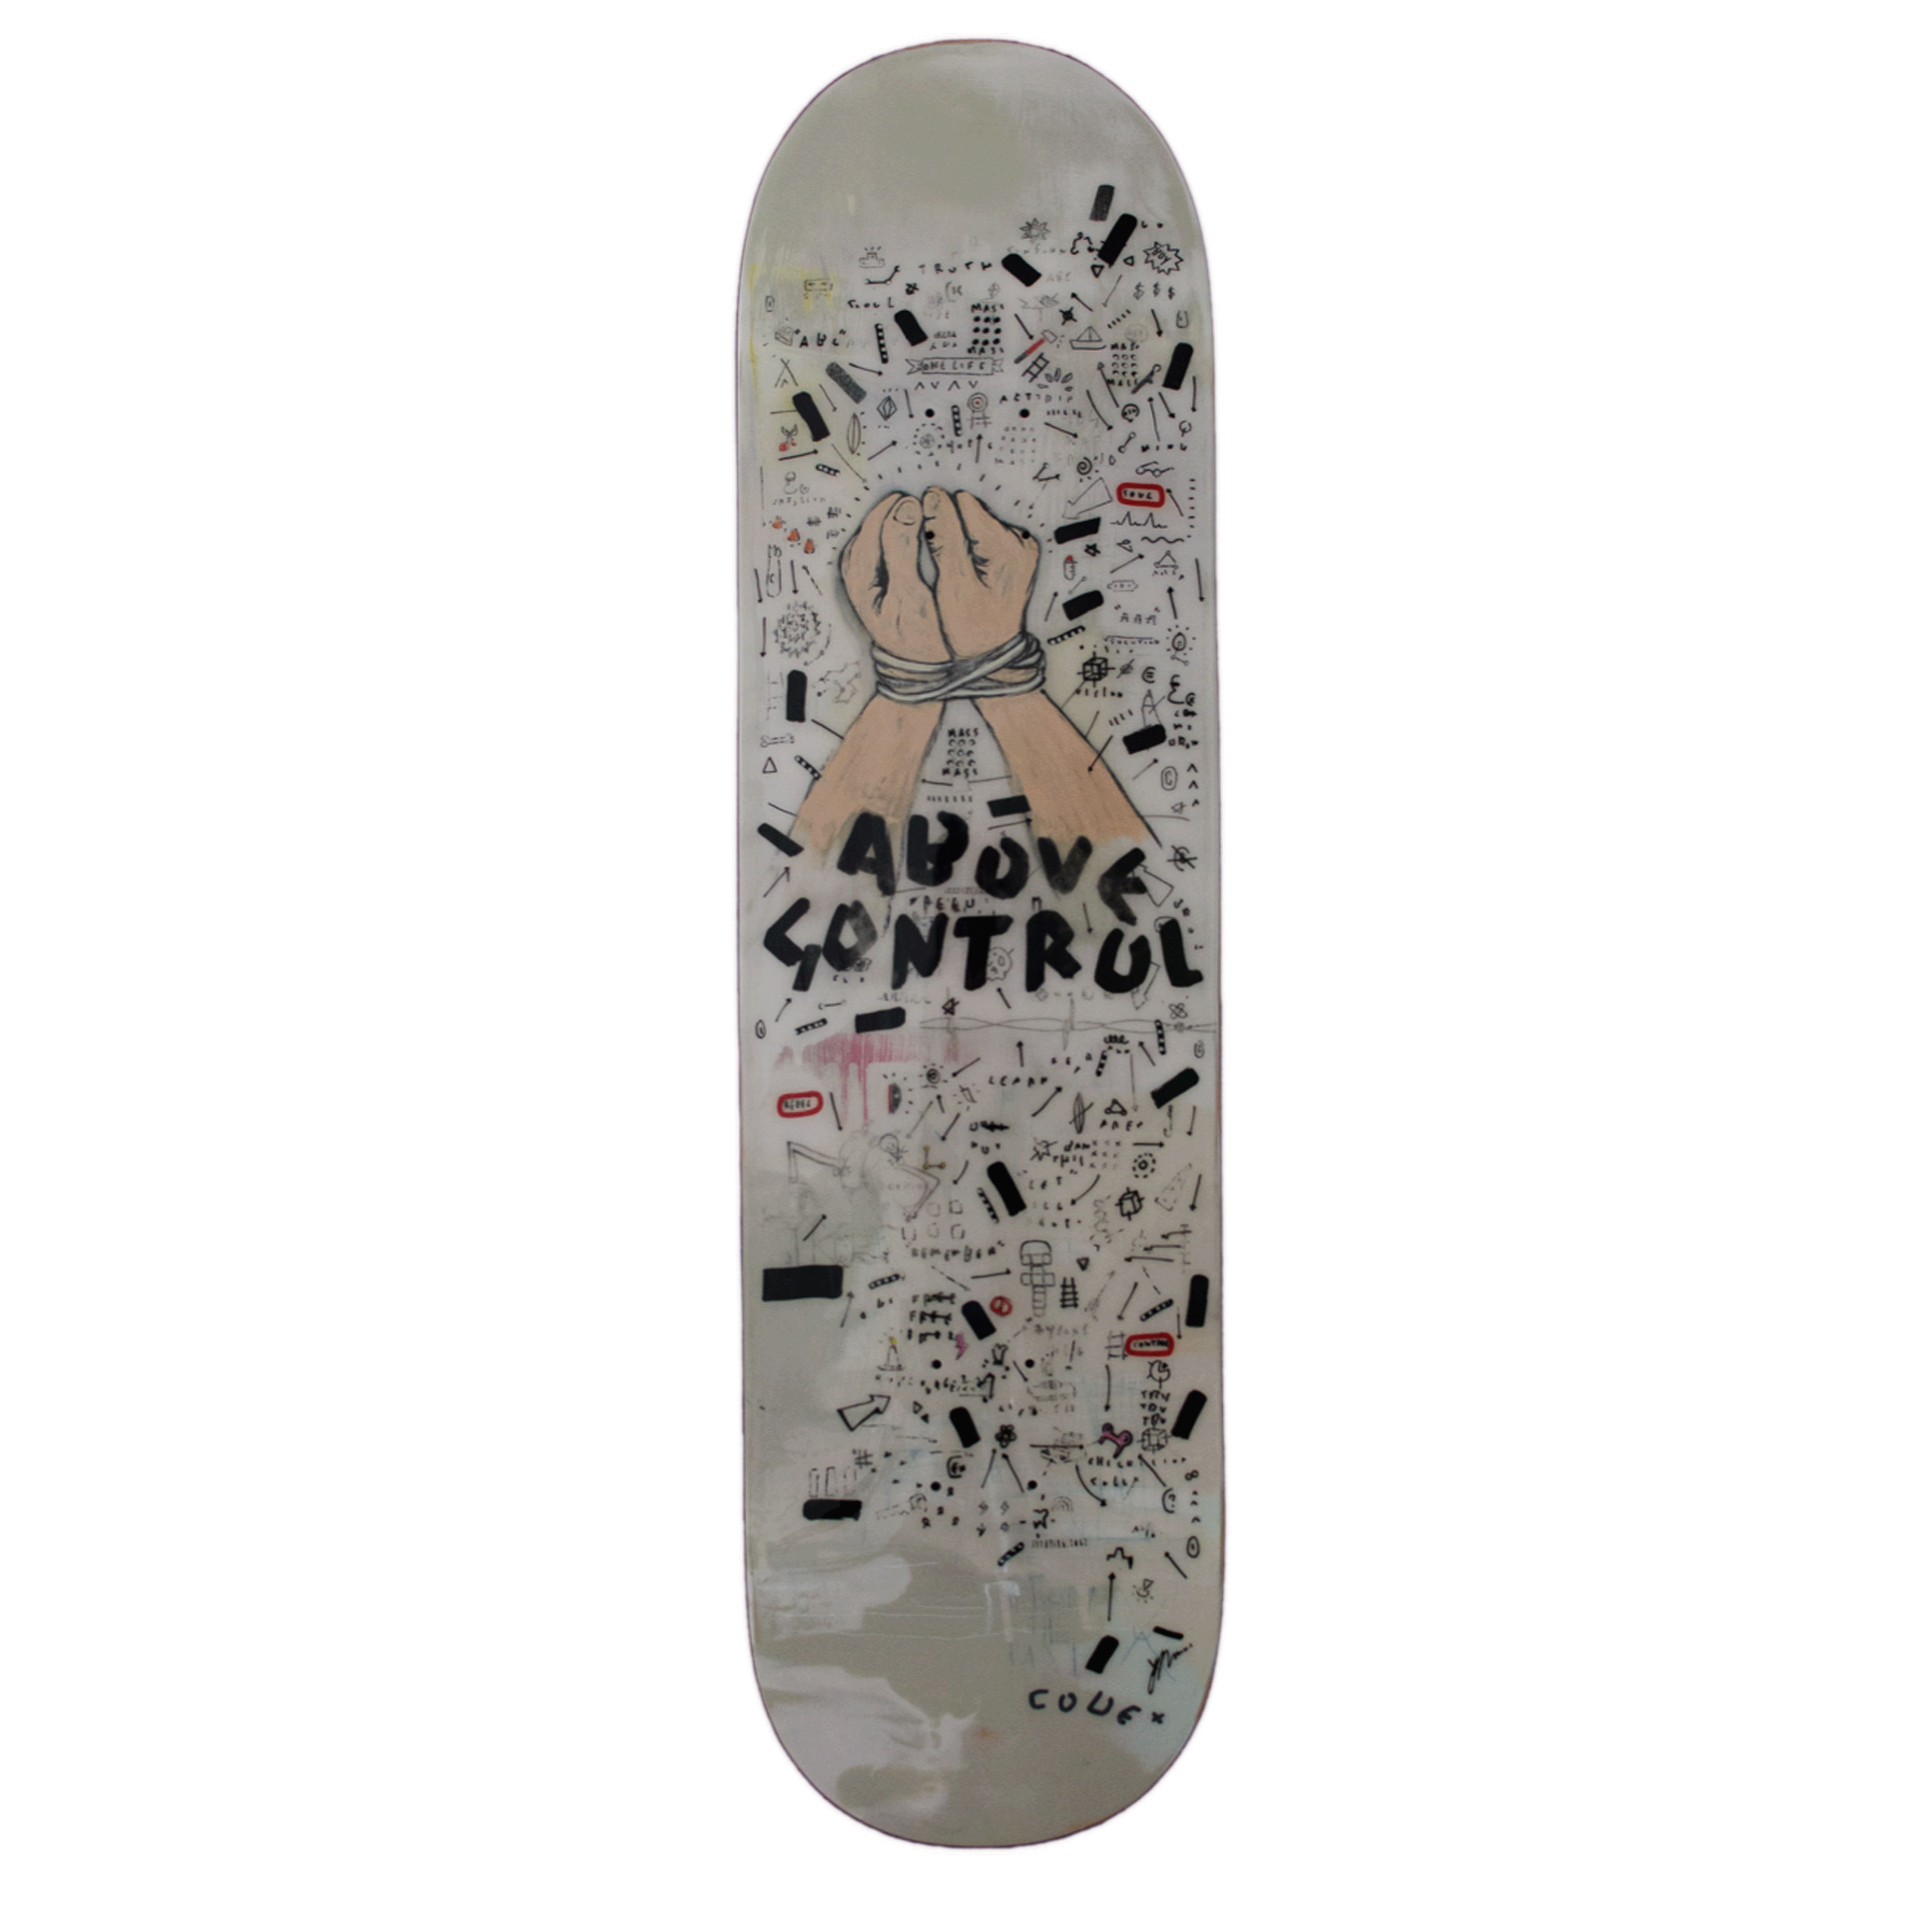 Sebastien Dominici - Skate « Above Control » - Mixed Media & Resin - 21,5x81 cm